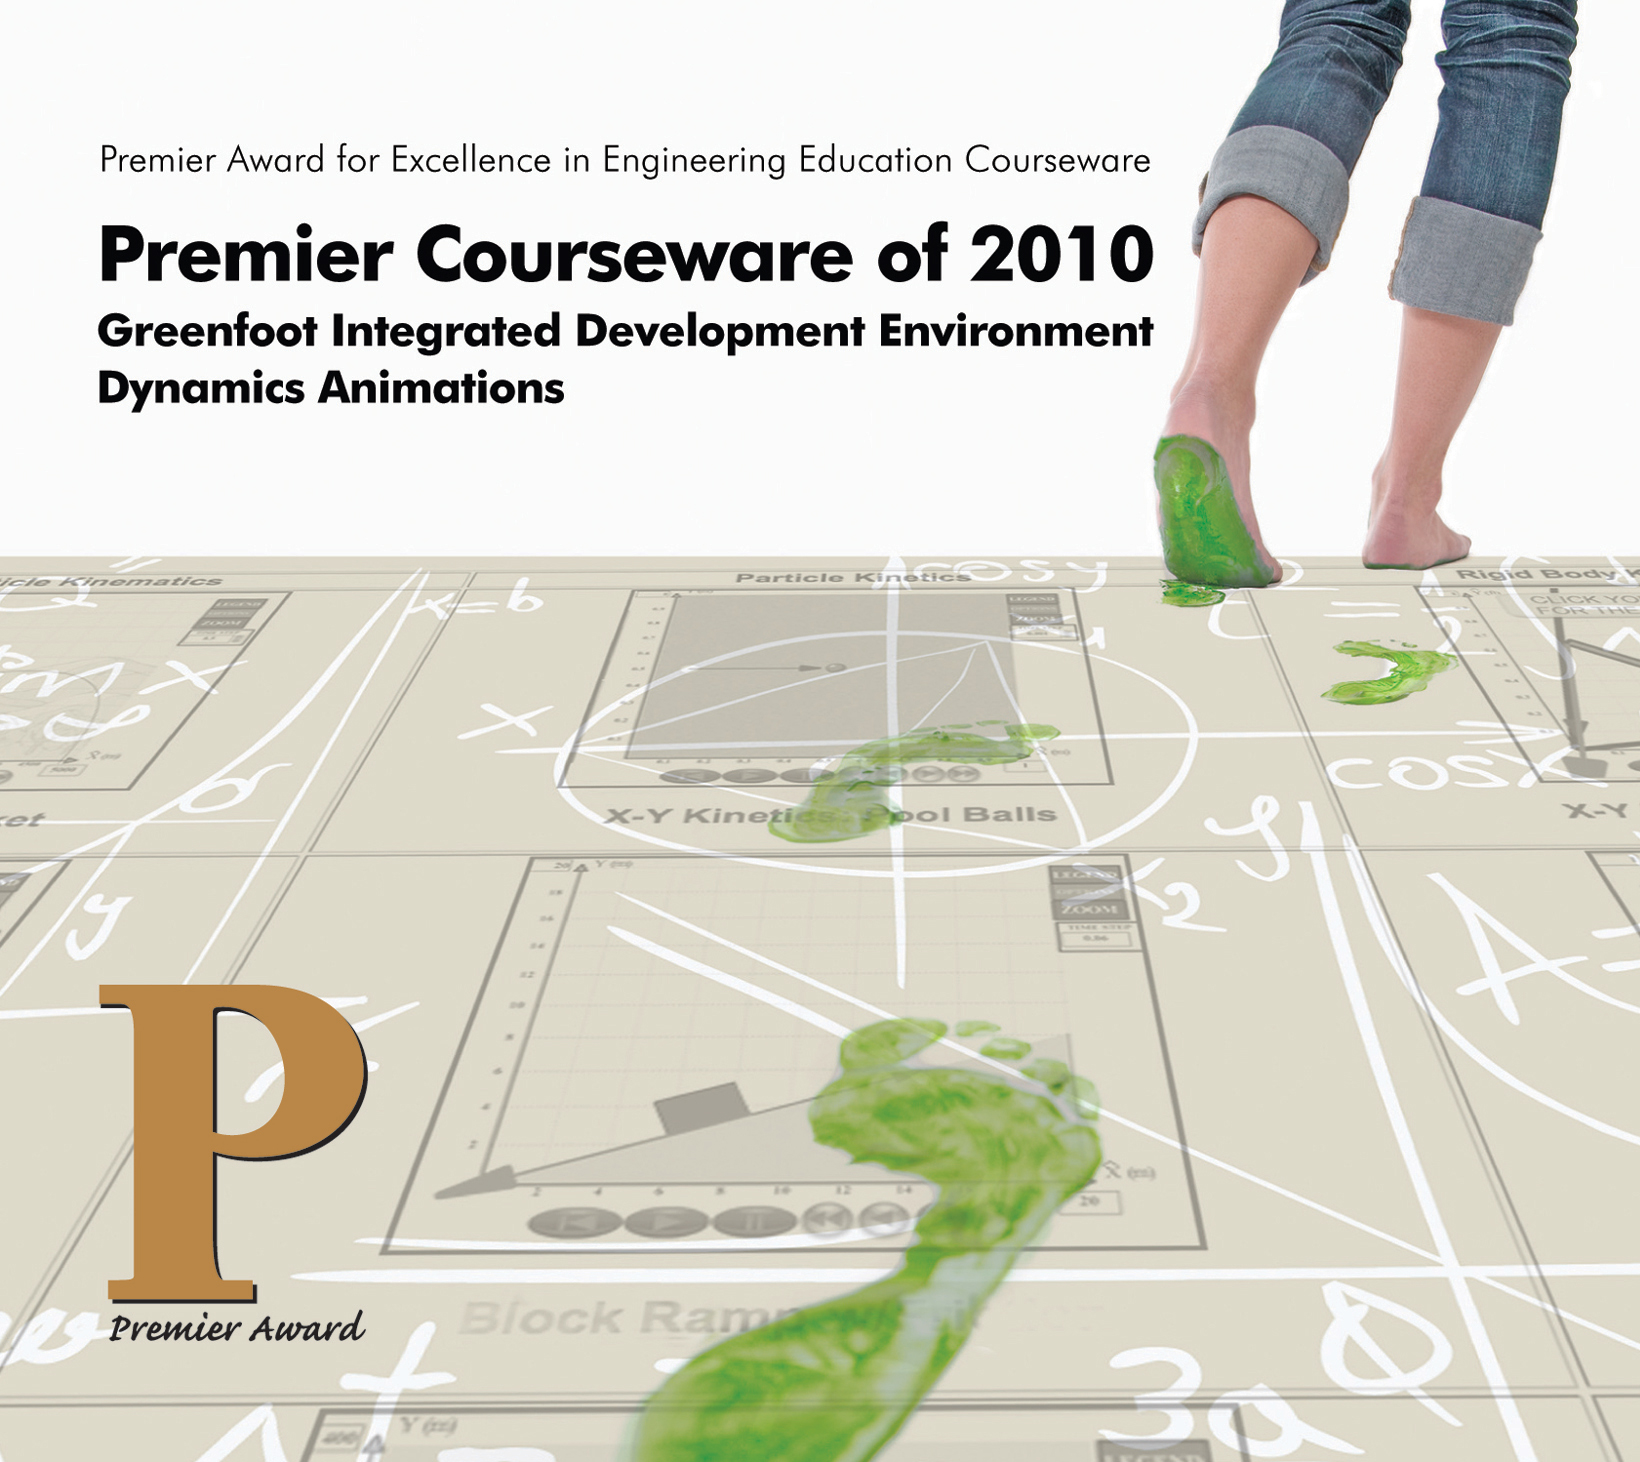 Premier Courseware of 2010